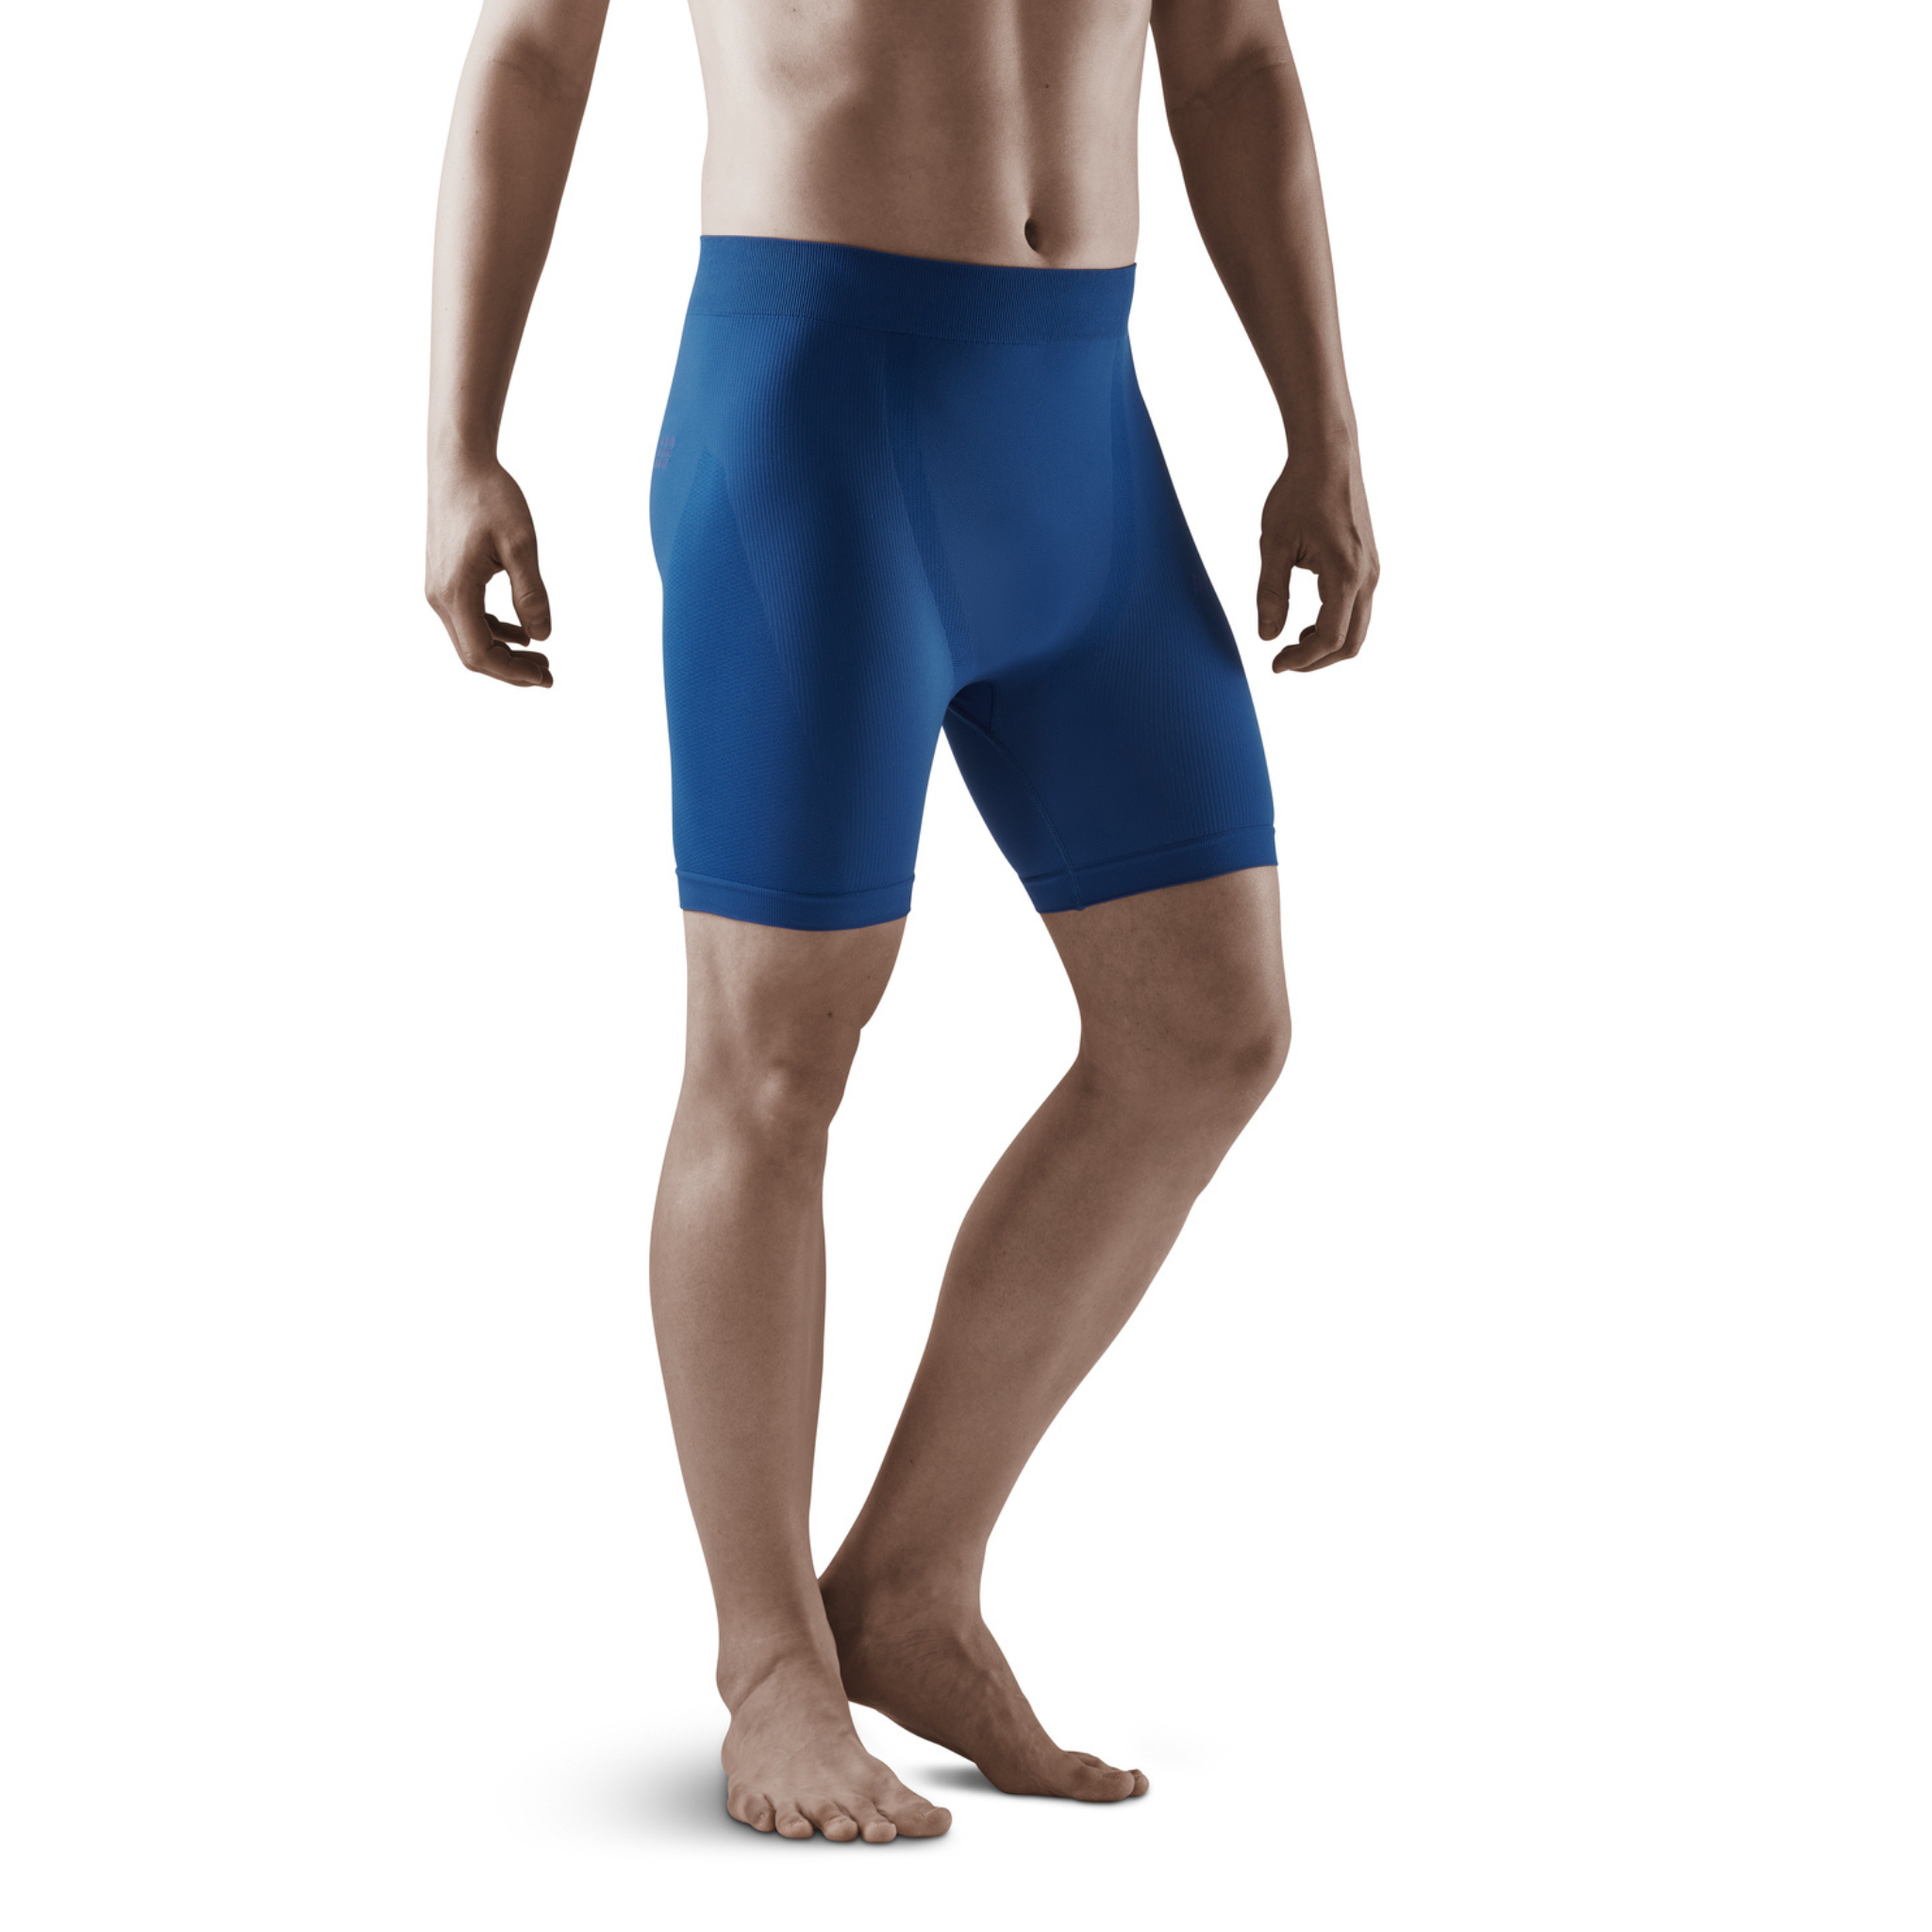 Men Cotton Compression Shorts and Half Tights (Comet Blue)